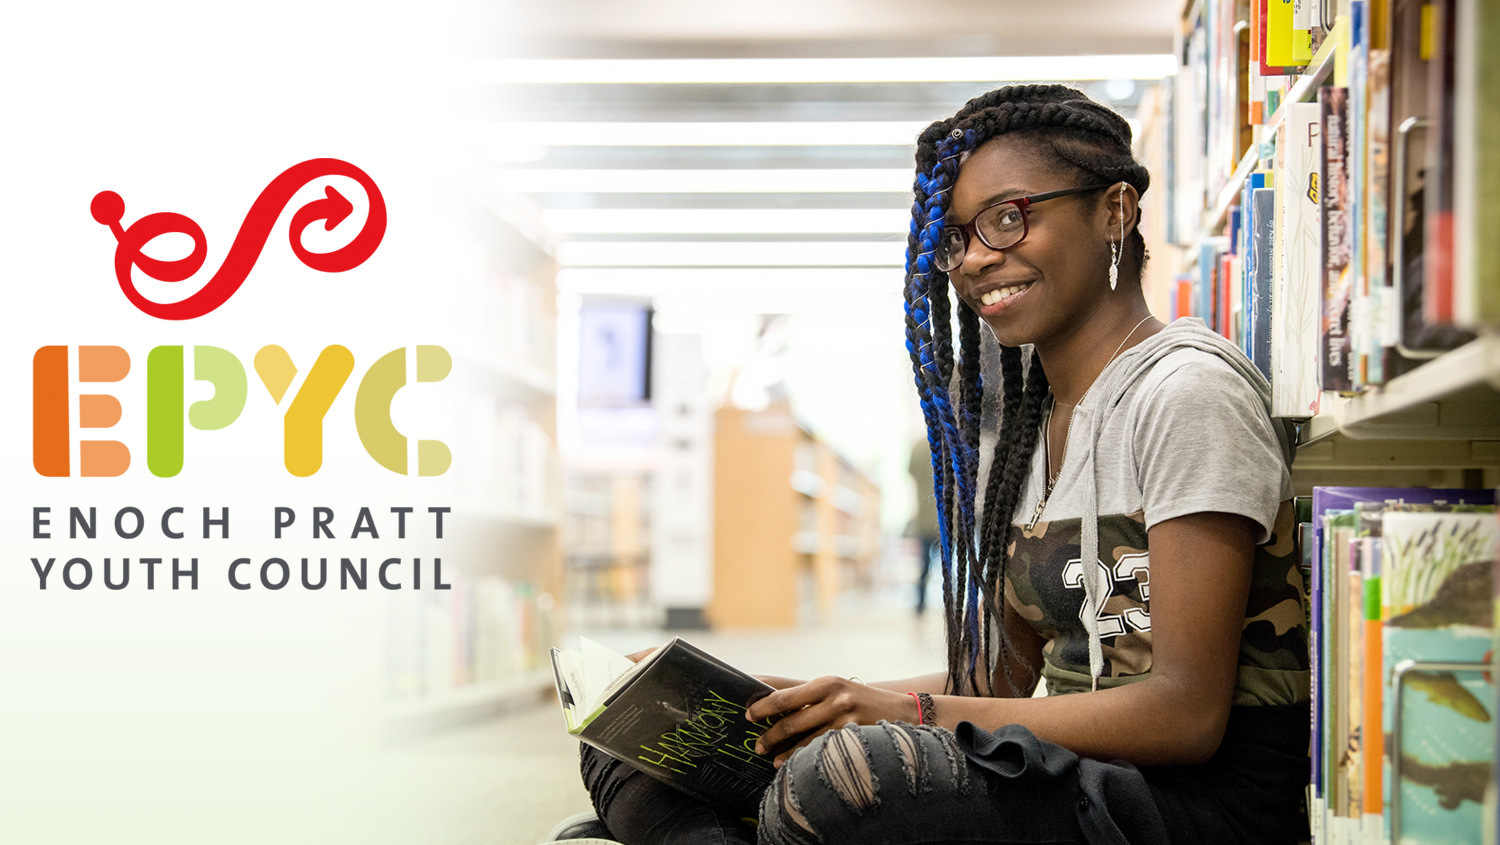 teen library volunteer - EPYC logo - Enoch Pratt Youth Council